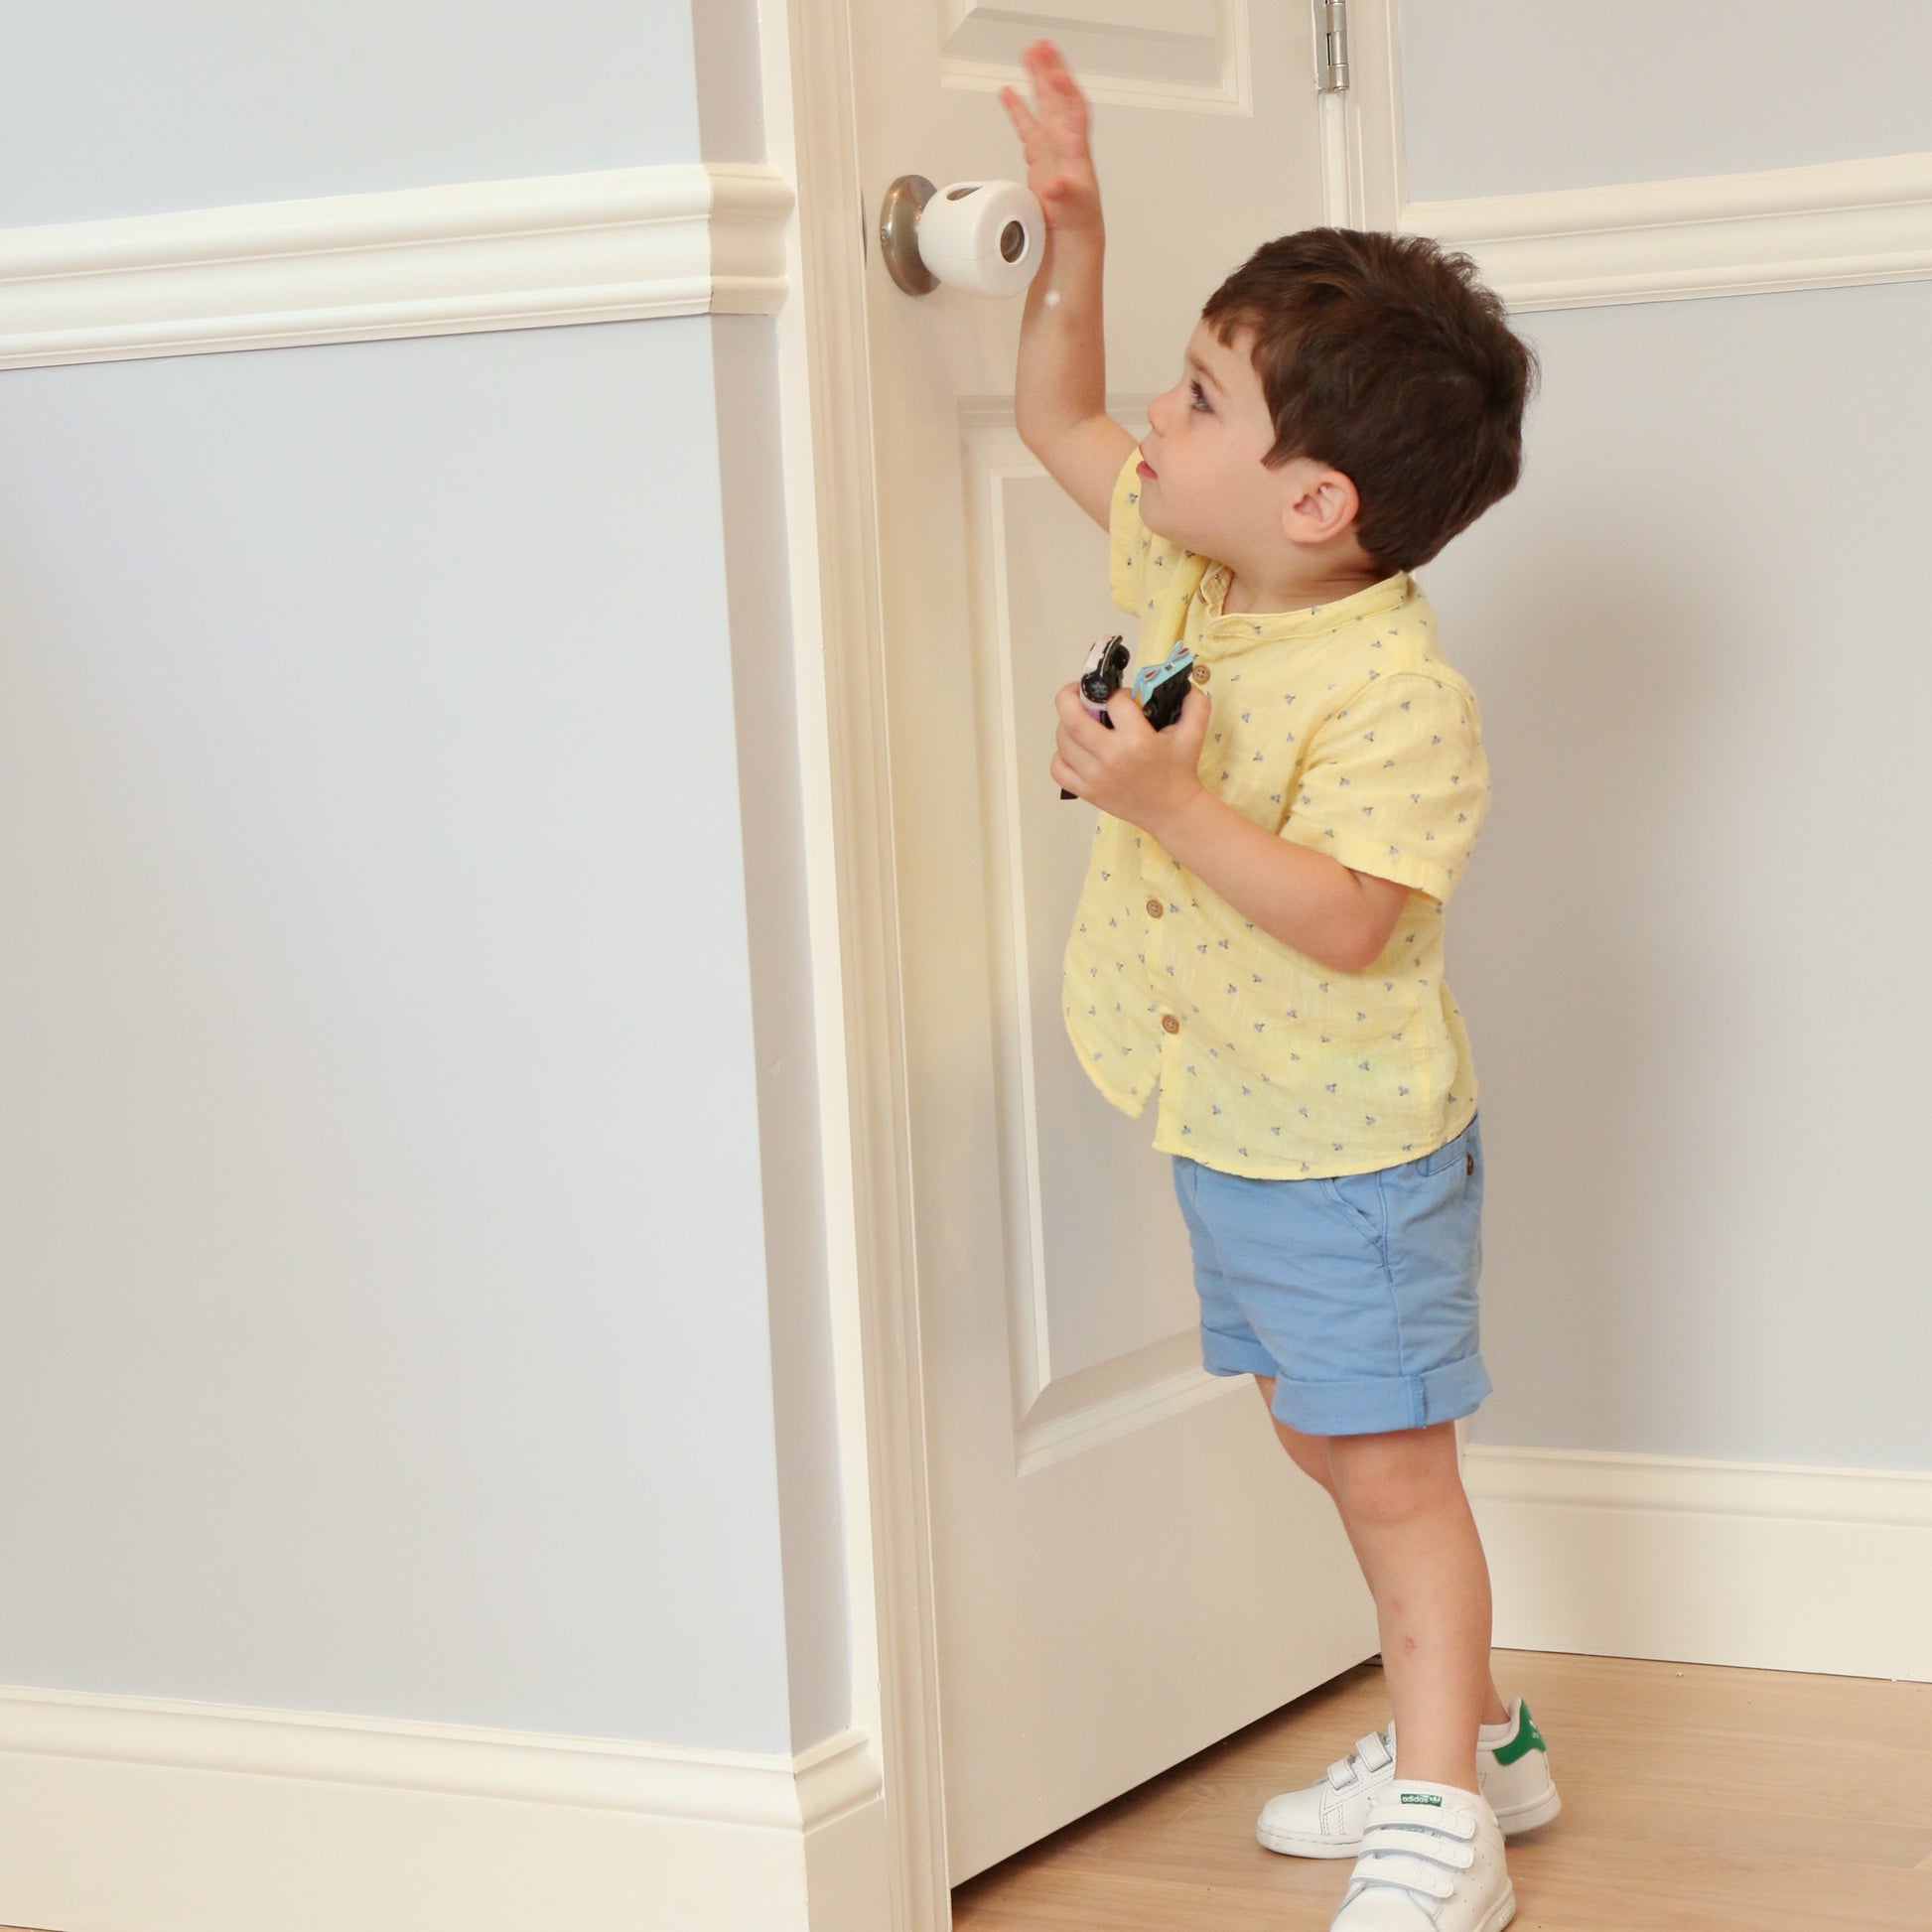 Door Knob Safety Cover for Kids, Child Proof Door Knob Covers, Baby Safety Door Knob Handle Cover Lockable Design (4 Pack)